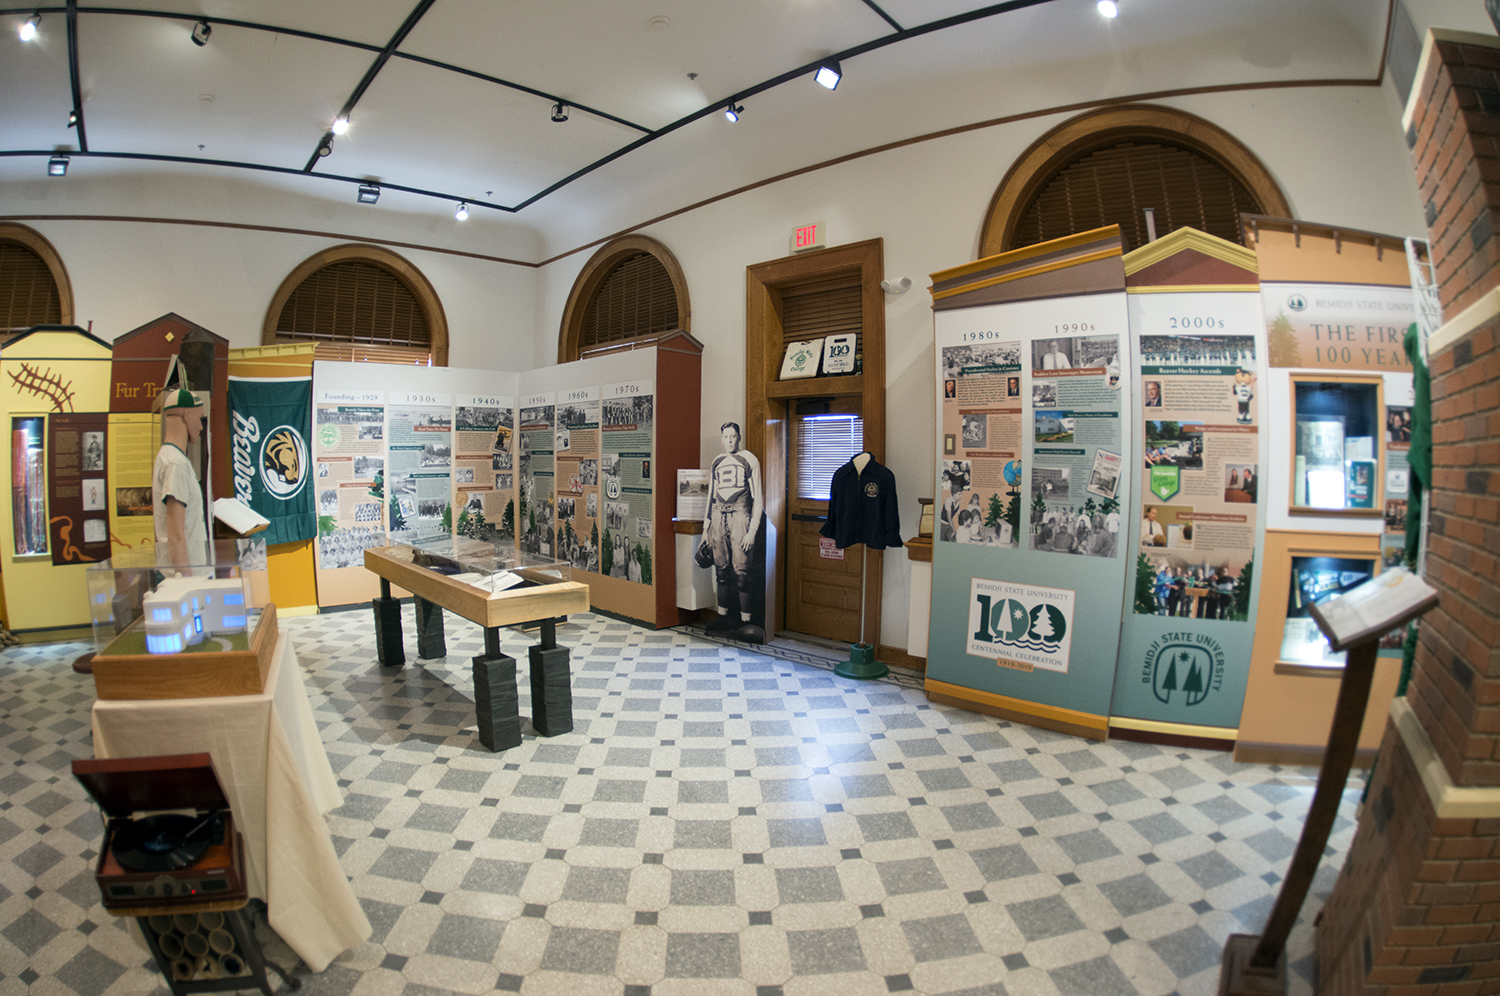 The Beltrami County Historical Society opened an exhibit celebrating Bemidji State University’s Centennial year in June 2019